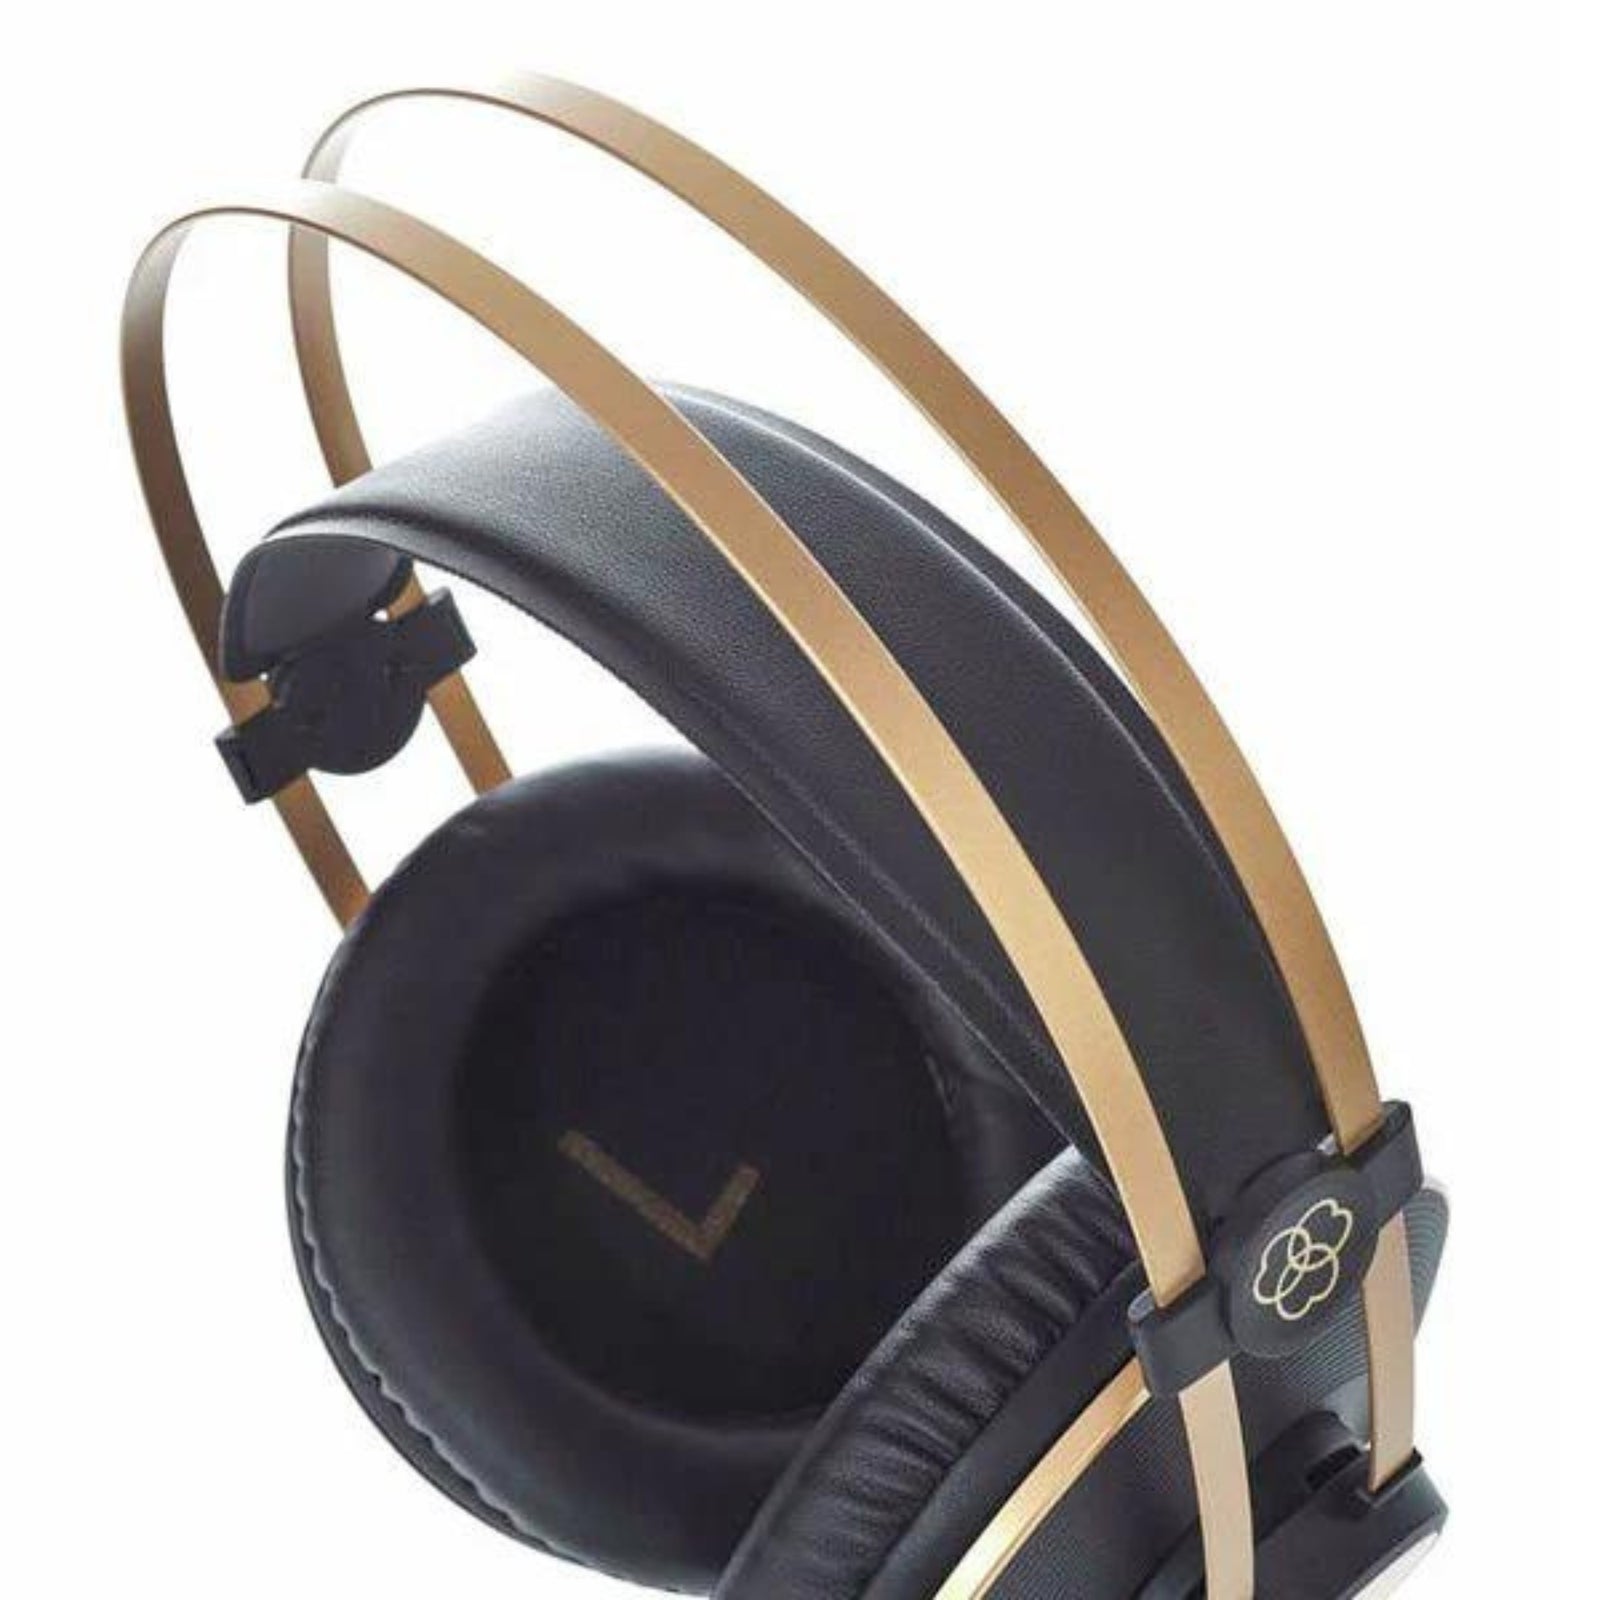 AKG K92 Closed-back Over Ear Monitoring Headphones